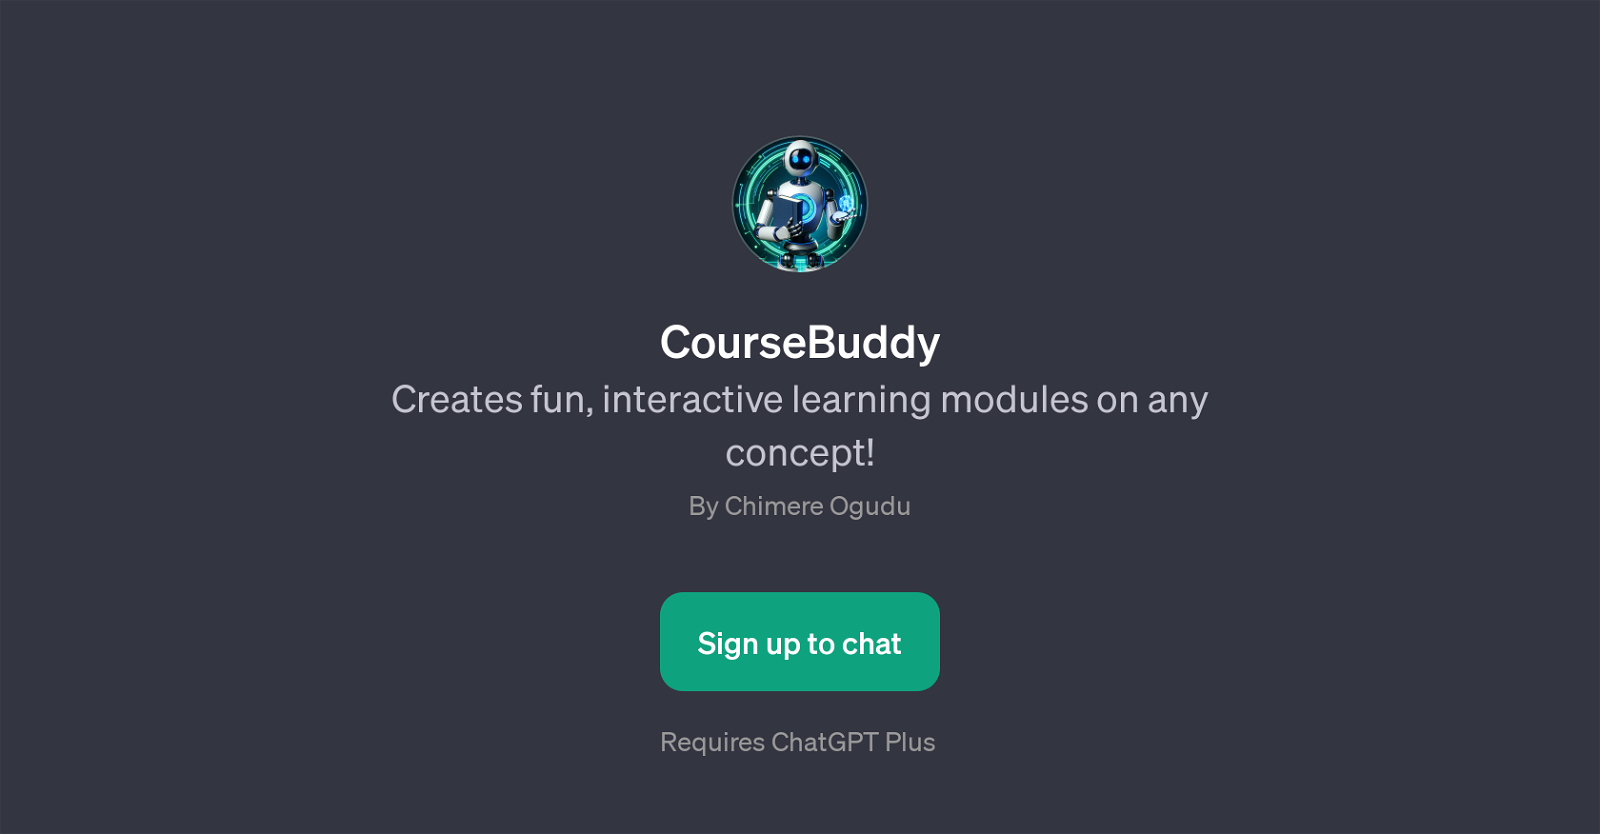 CourseBuddy website